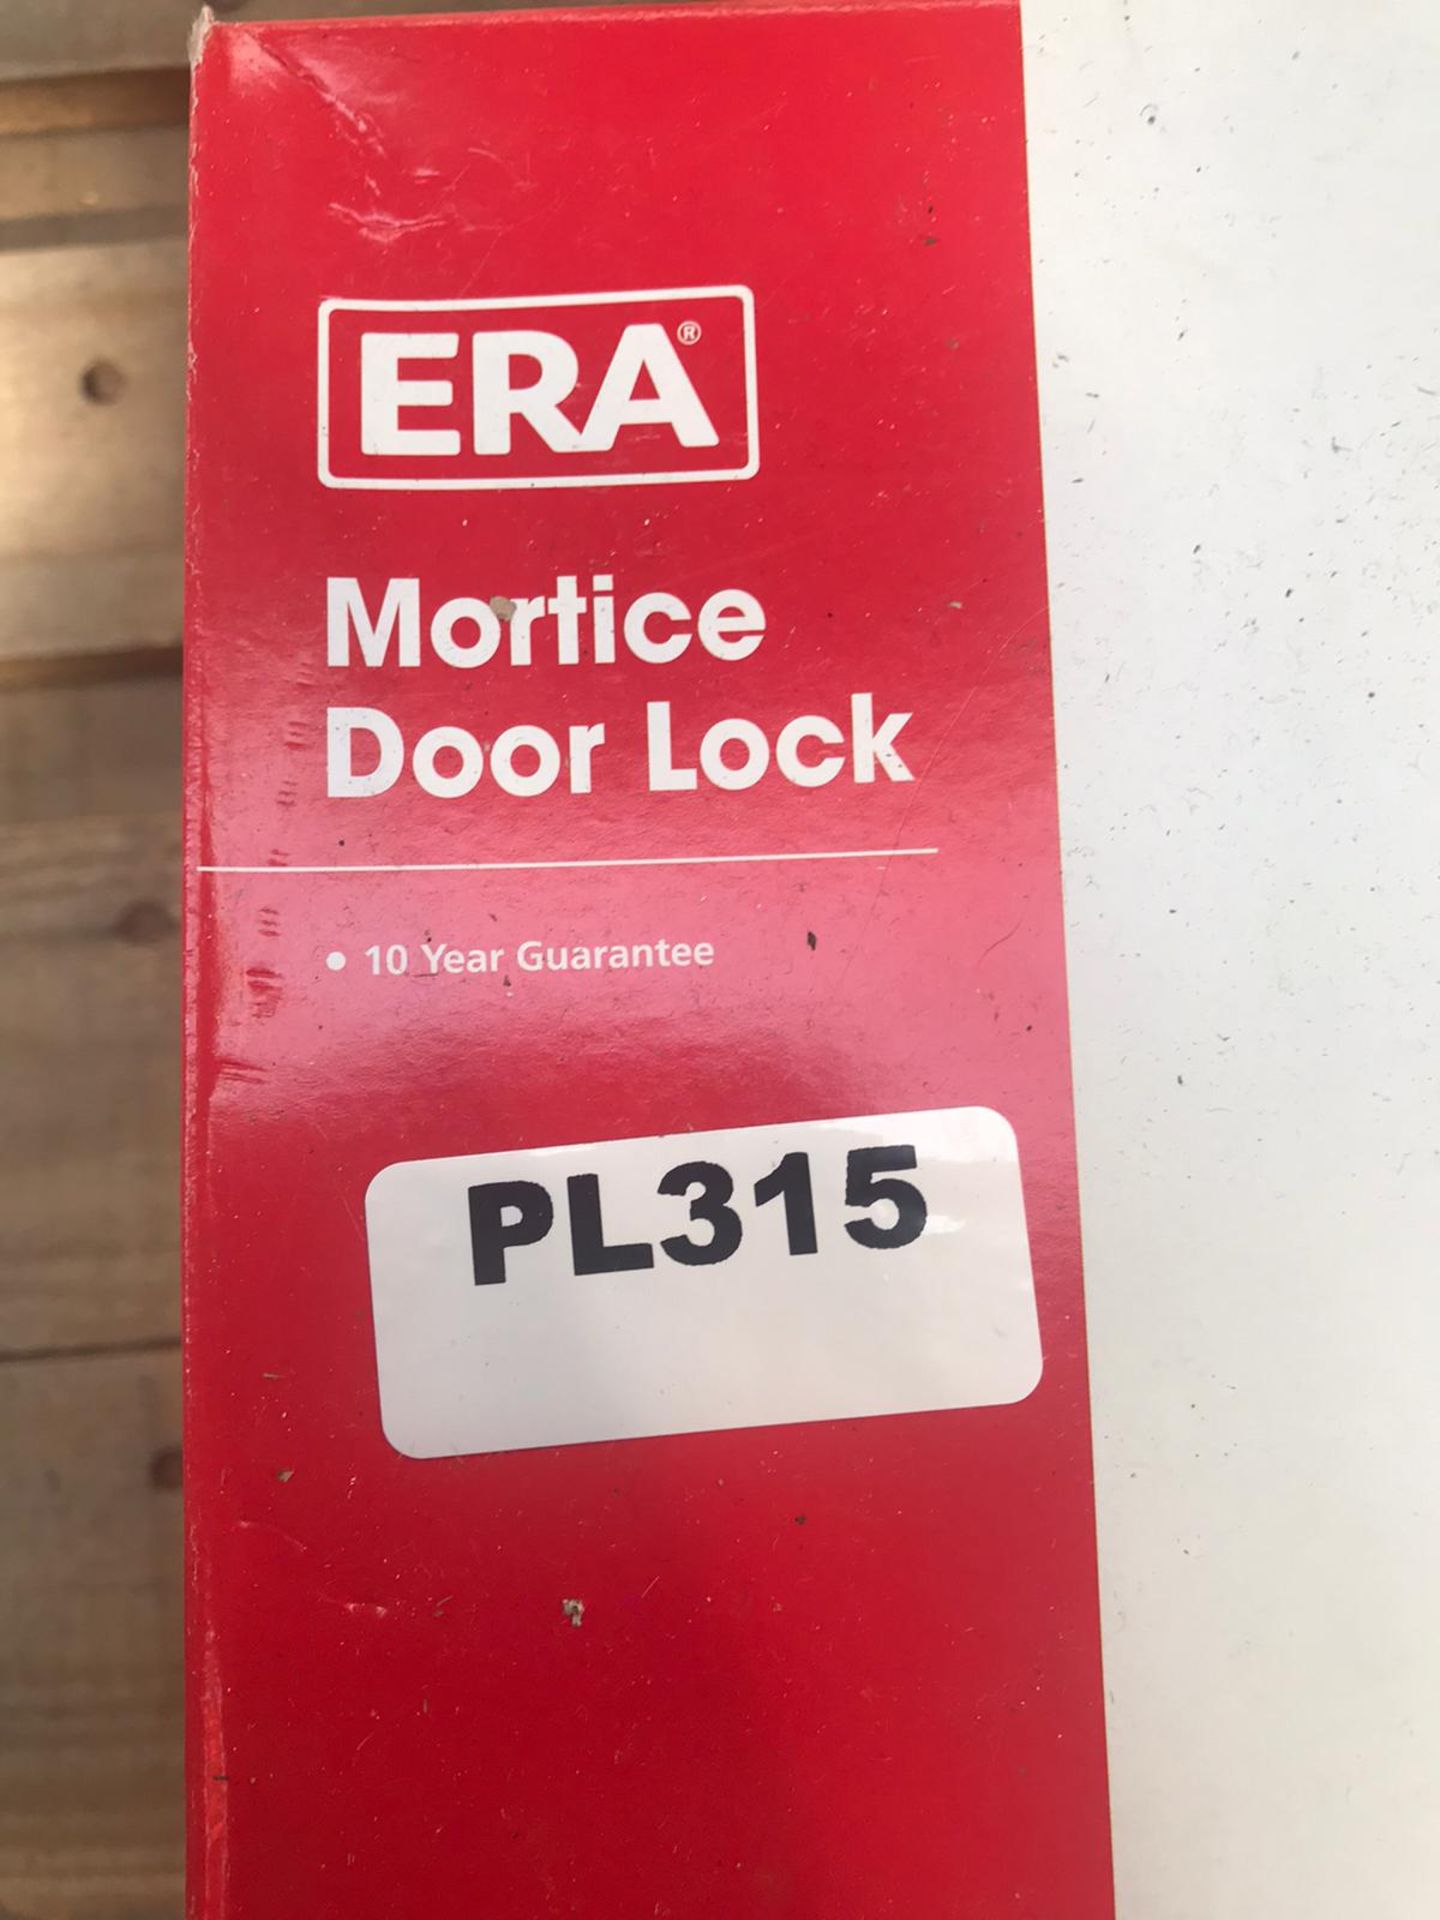 6 x ERA 2 1/2" Satin Pro-Fit  Mortice Sash Door locks - Product Code 221-51 MK- Brand New - Image 3 of 3